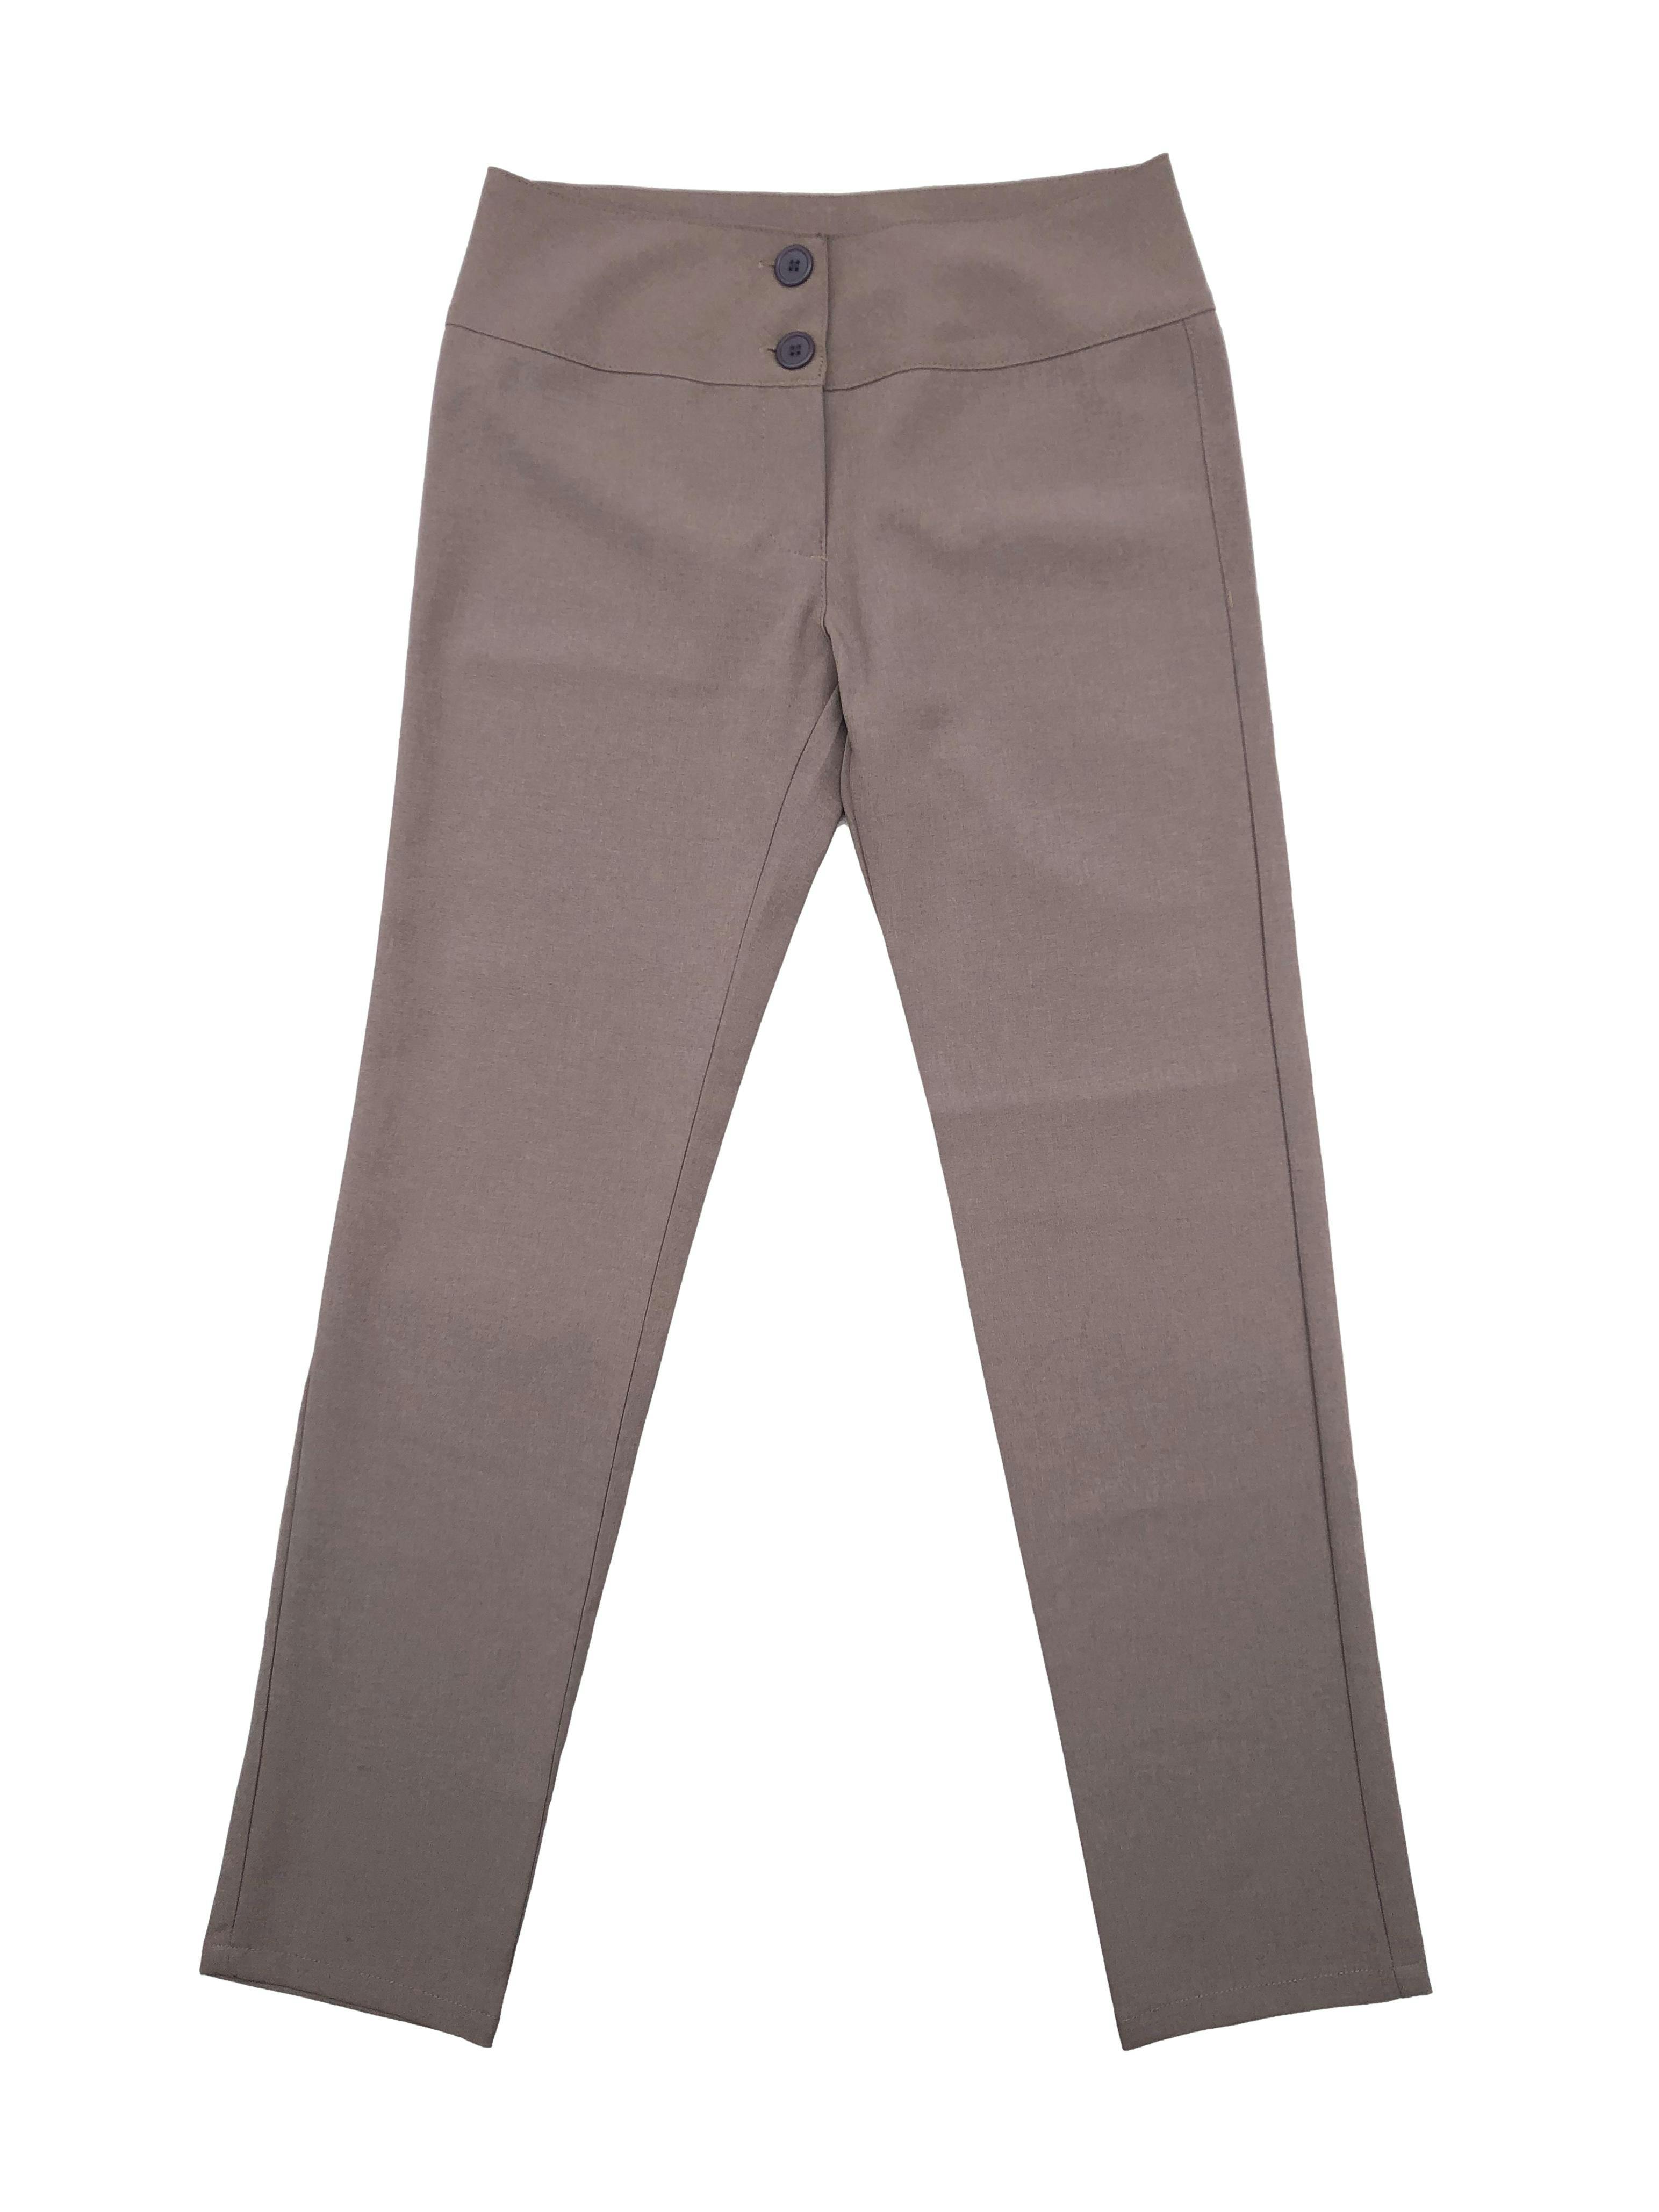 Pantalón Pierre Cardin color arena de tela plana, slim fit. Cintura 78cm Tiro 27cm Largo 100cm.